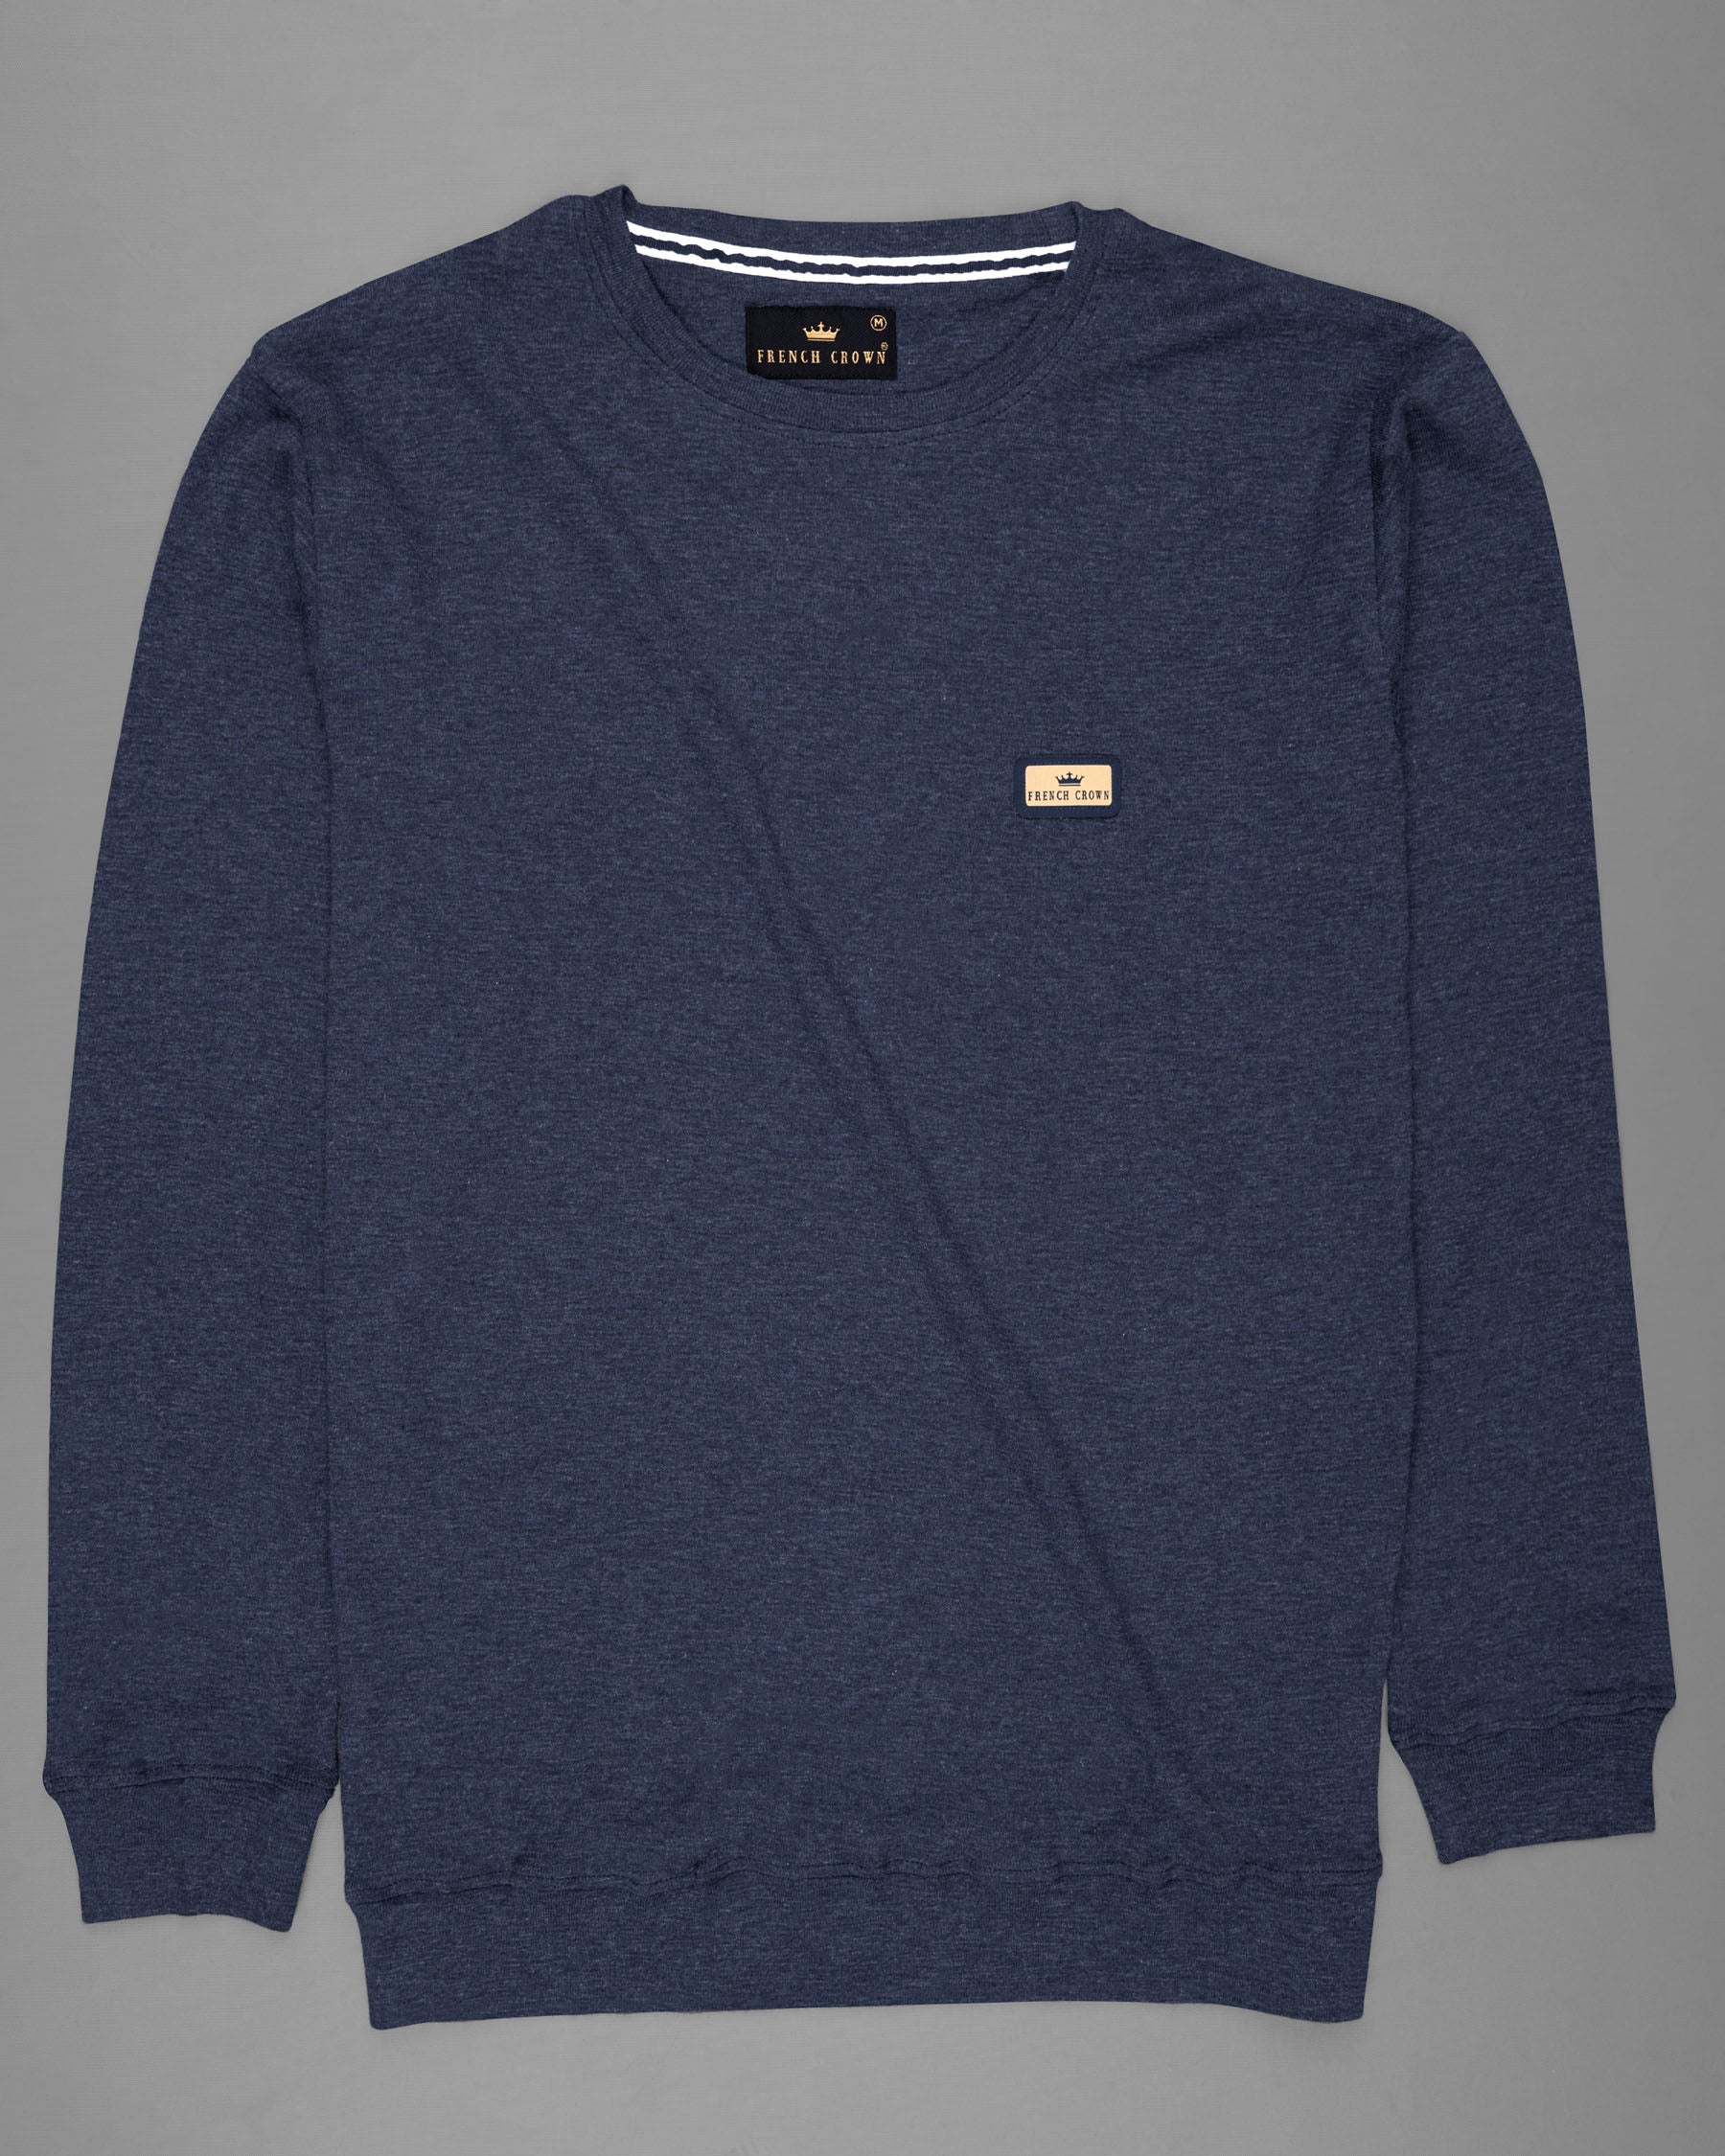 Martinique Blue Full Sleeve Premium Cotton Jersey Sweatshirt TS450-S, TS450-M, TS450-L, TS450-XL, TS450-XXL